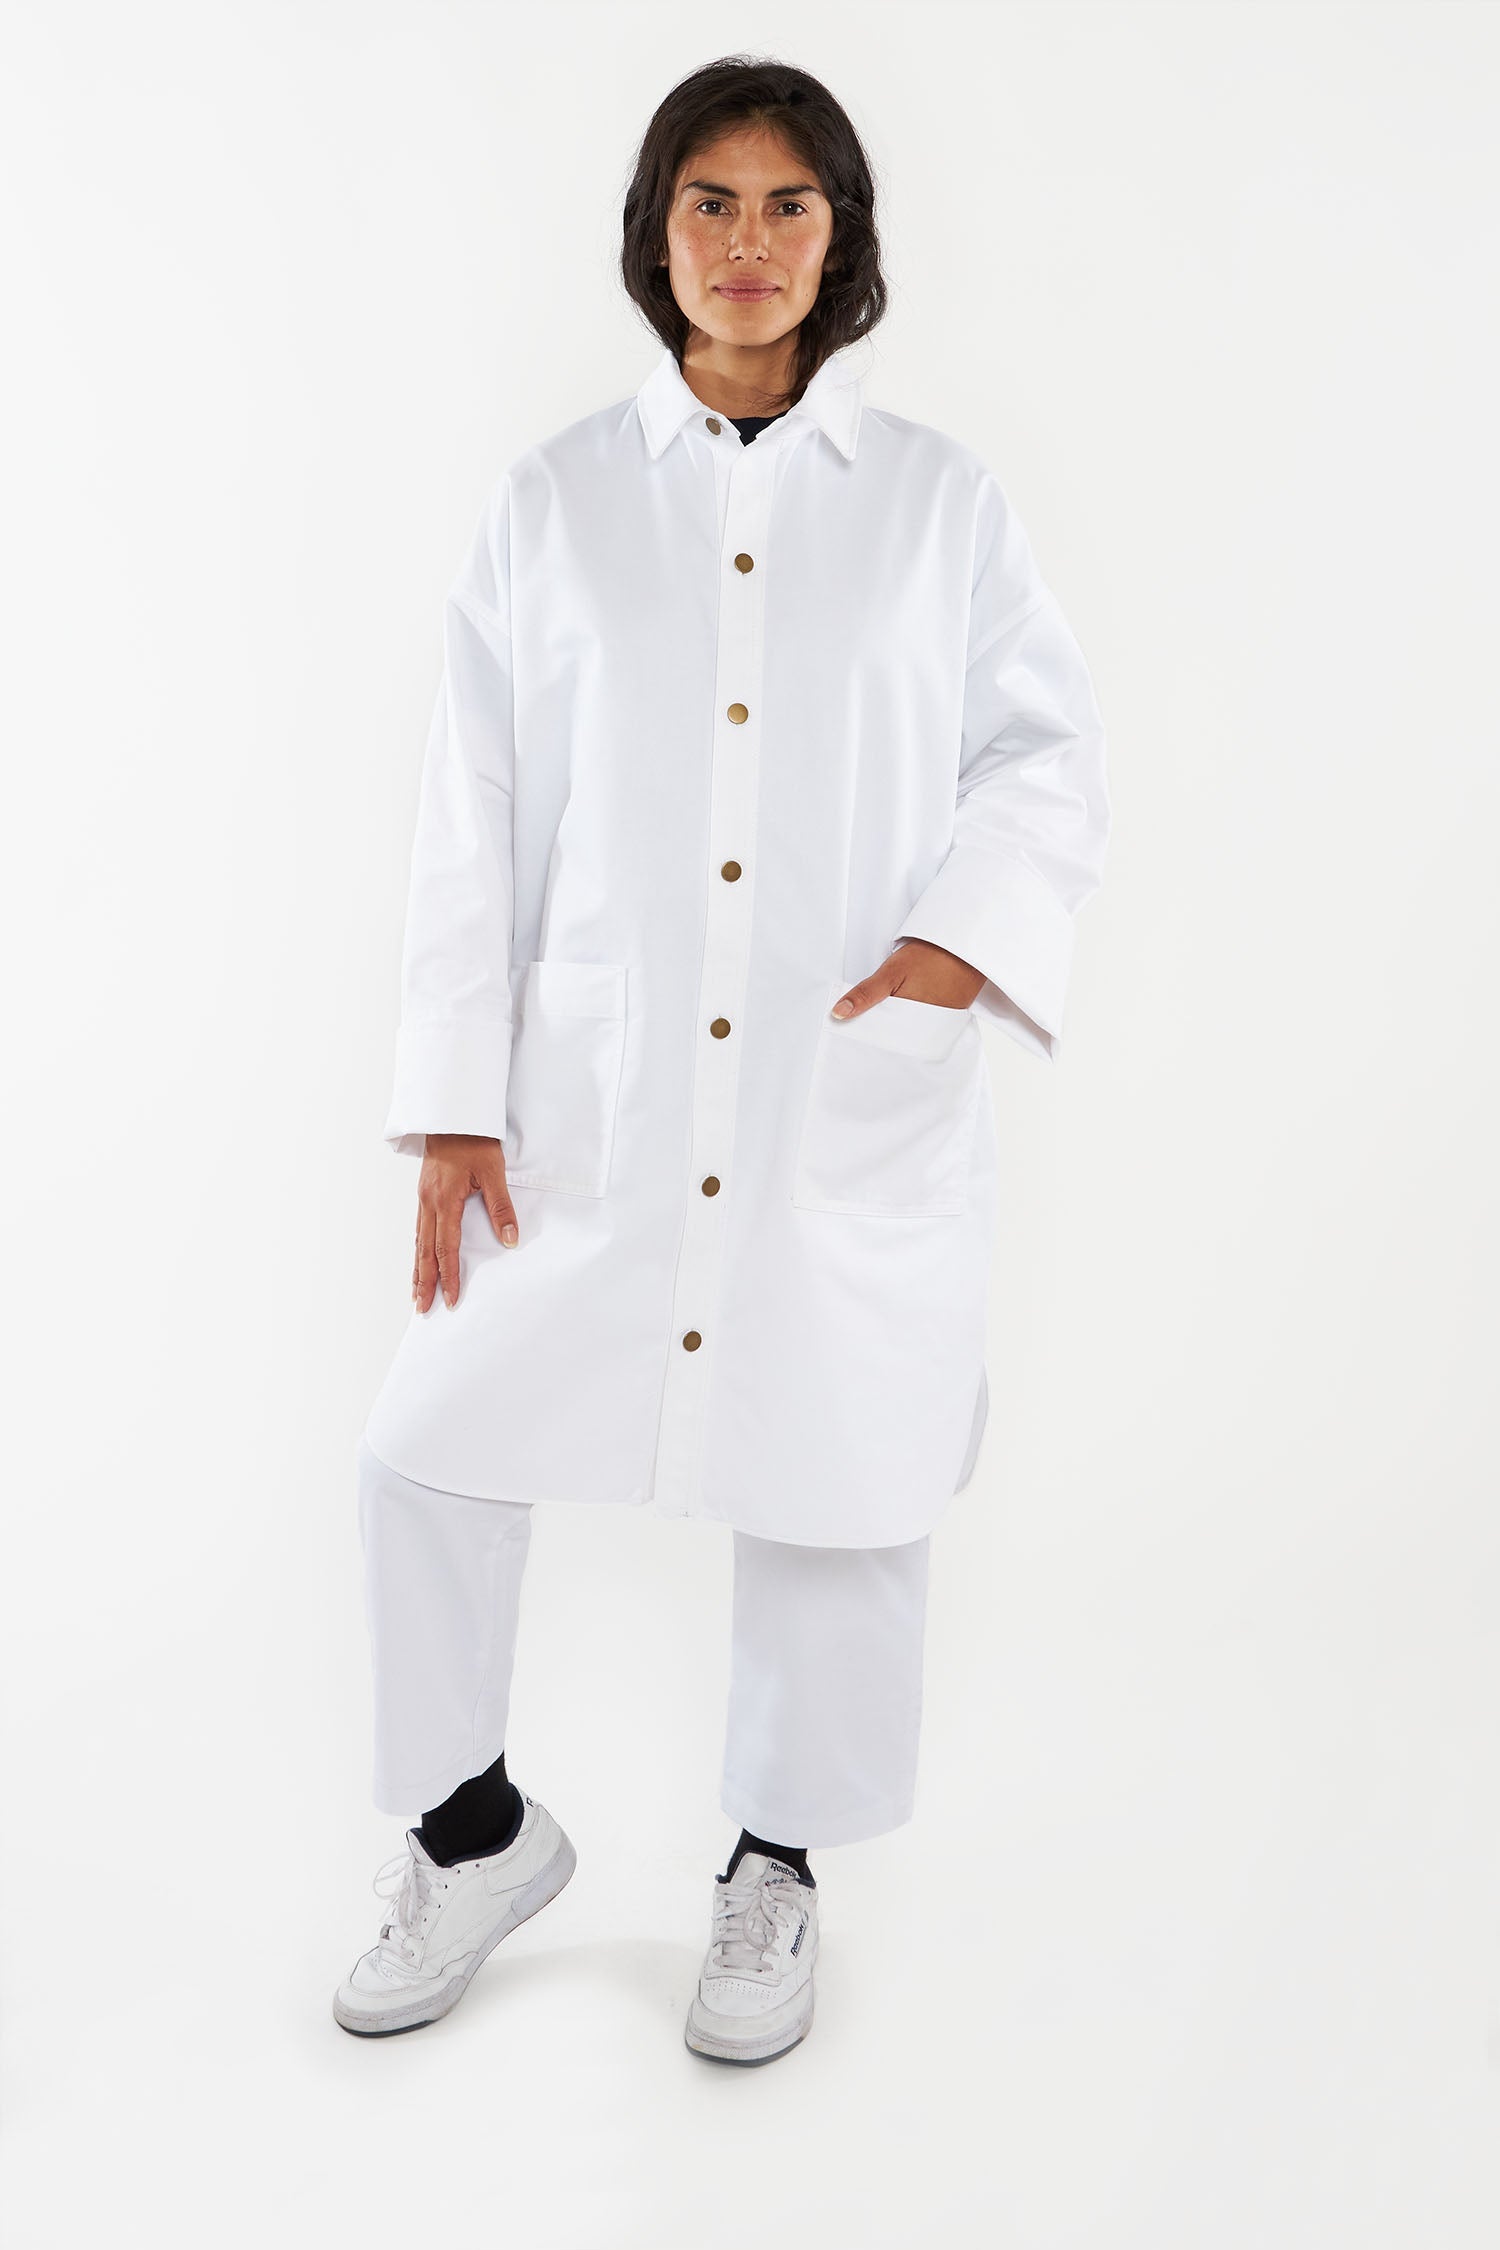 Superior Uniform Cotton Twill Knee-Length Lab Coats, Quantity: Each of 1